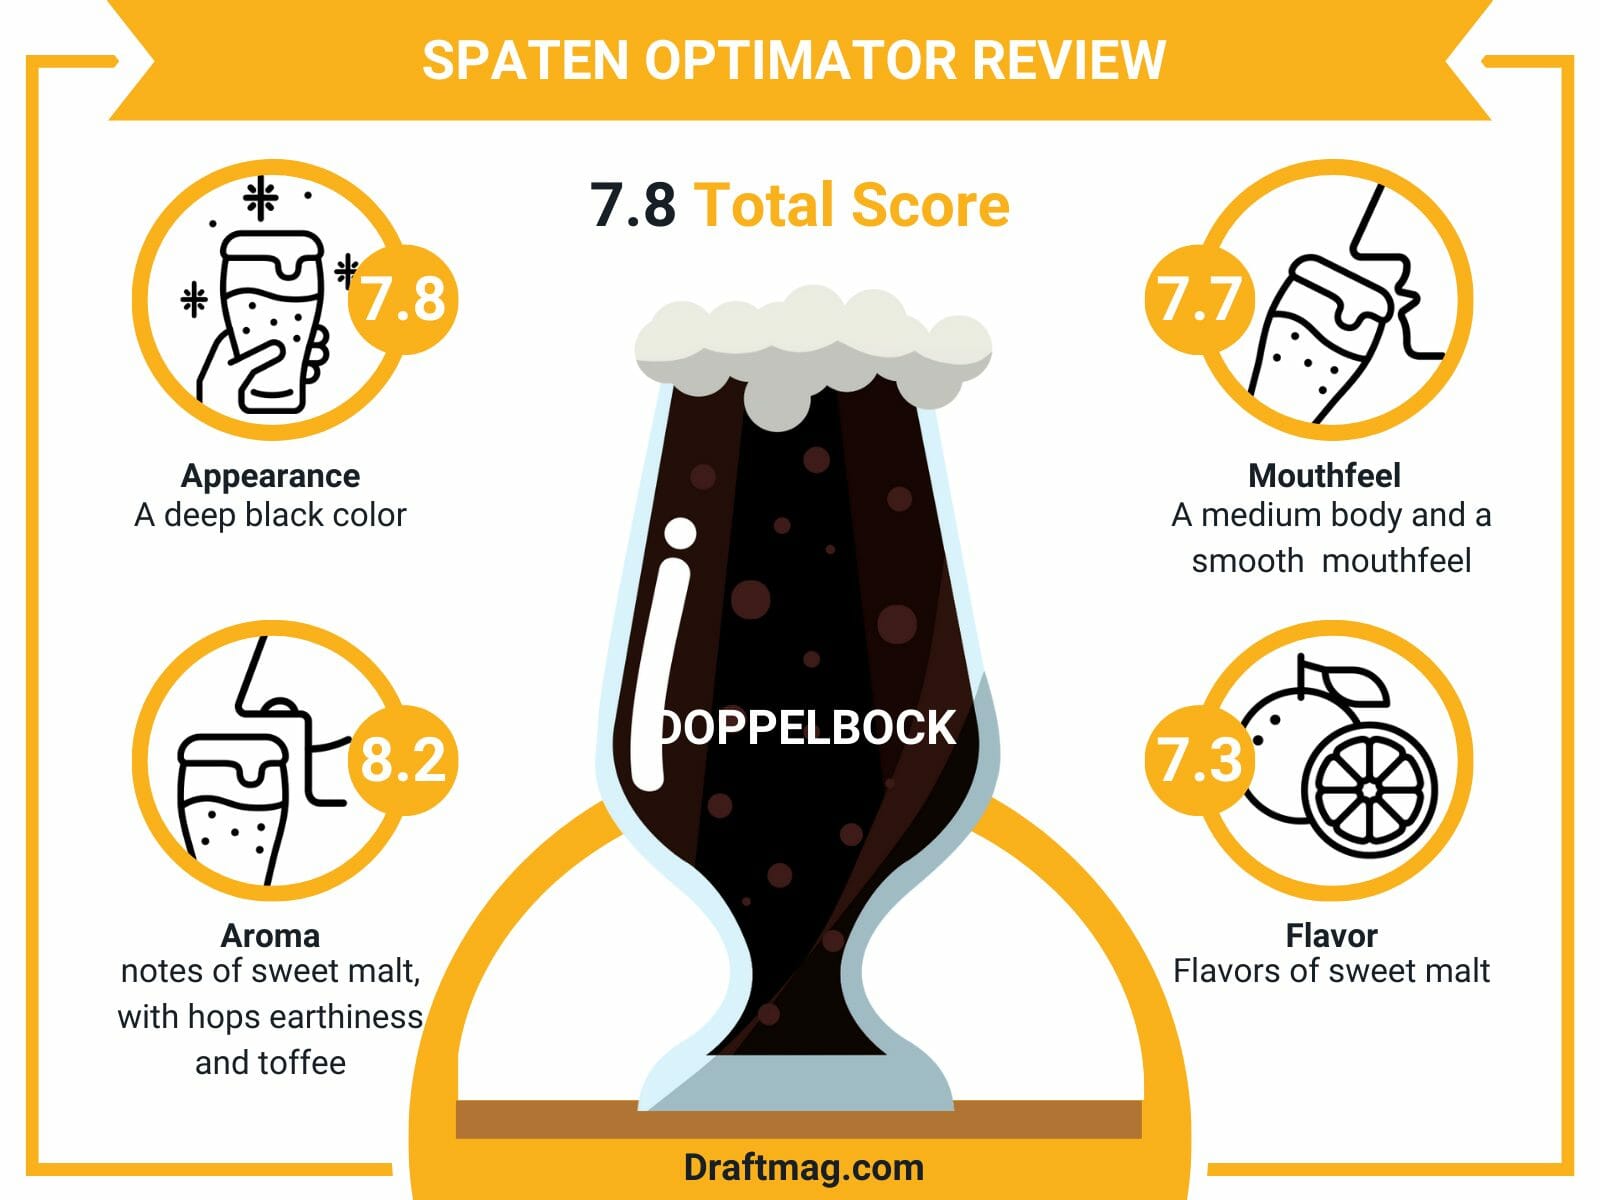 Spaten optimator review infographic